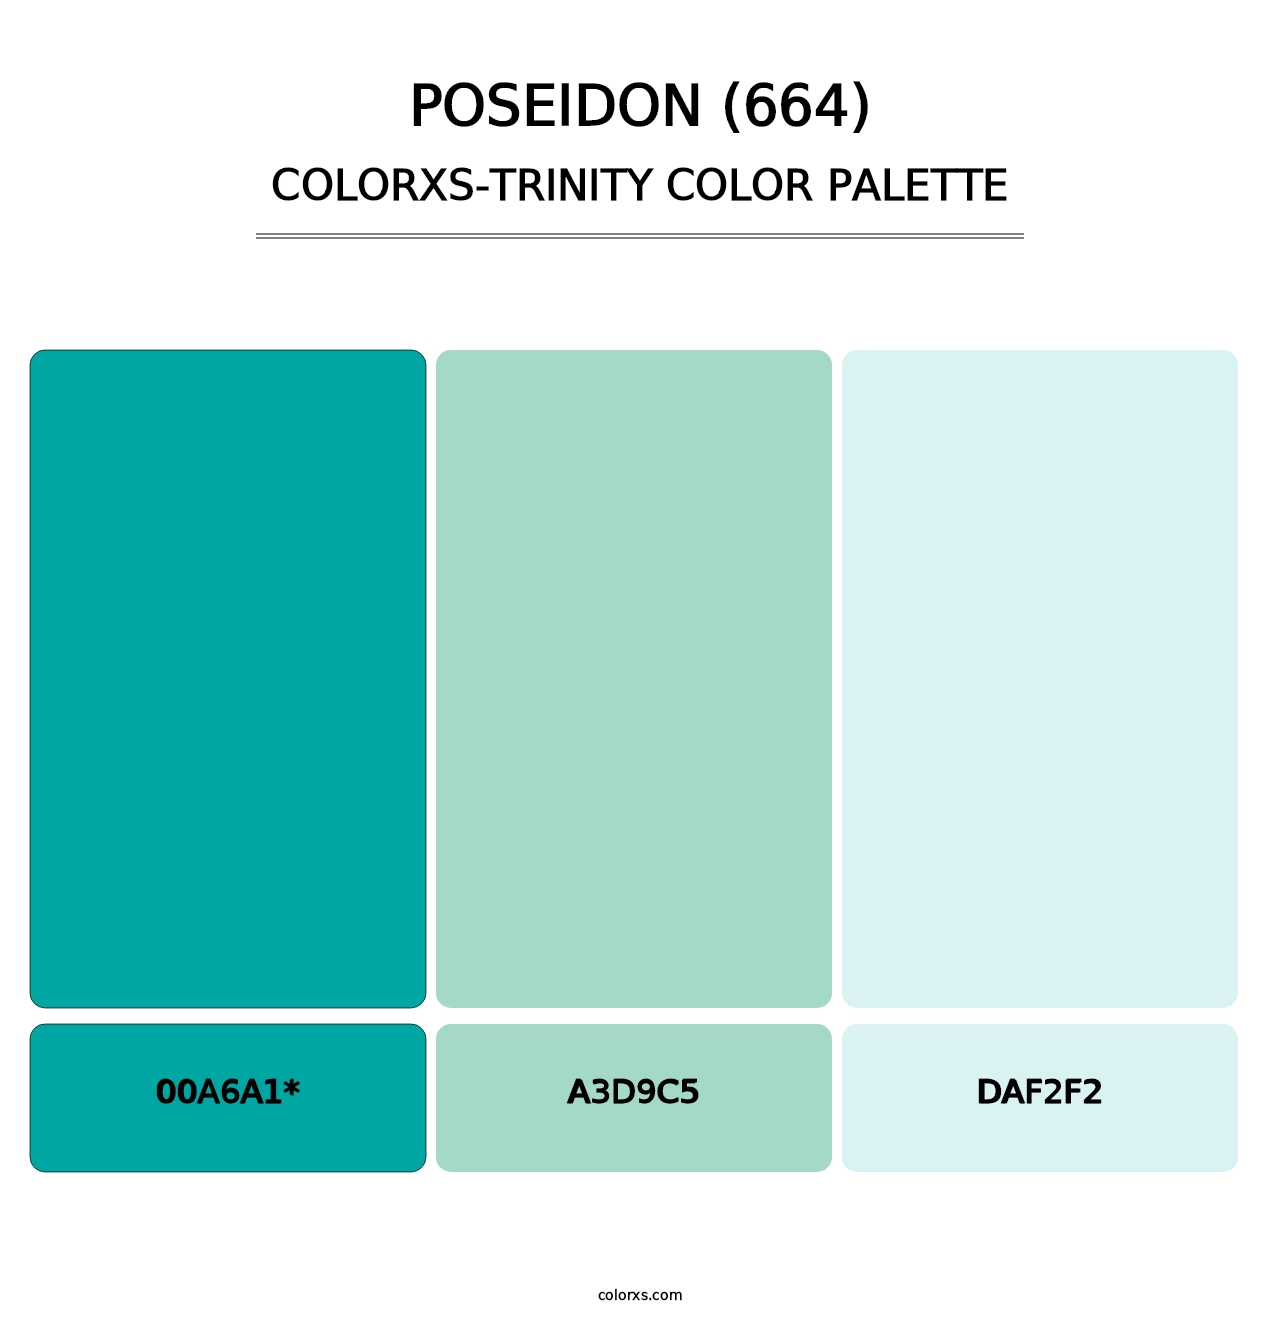 Poseidon (664) - Colorxs Trinity Palette